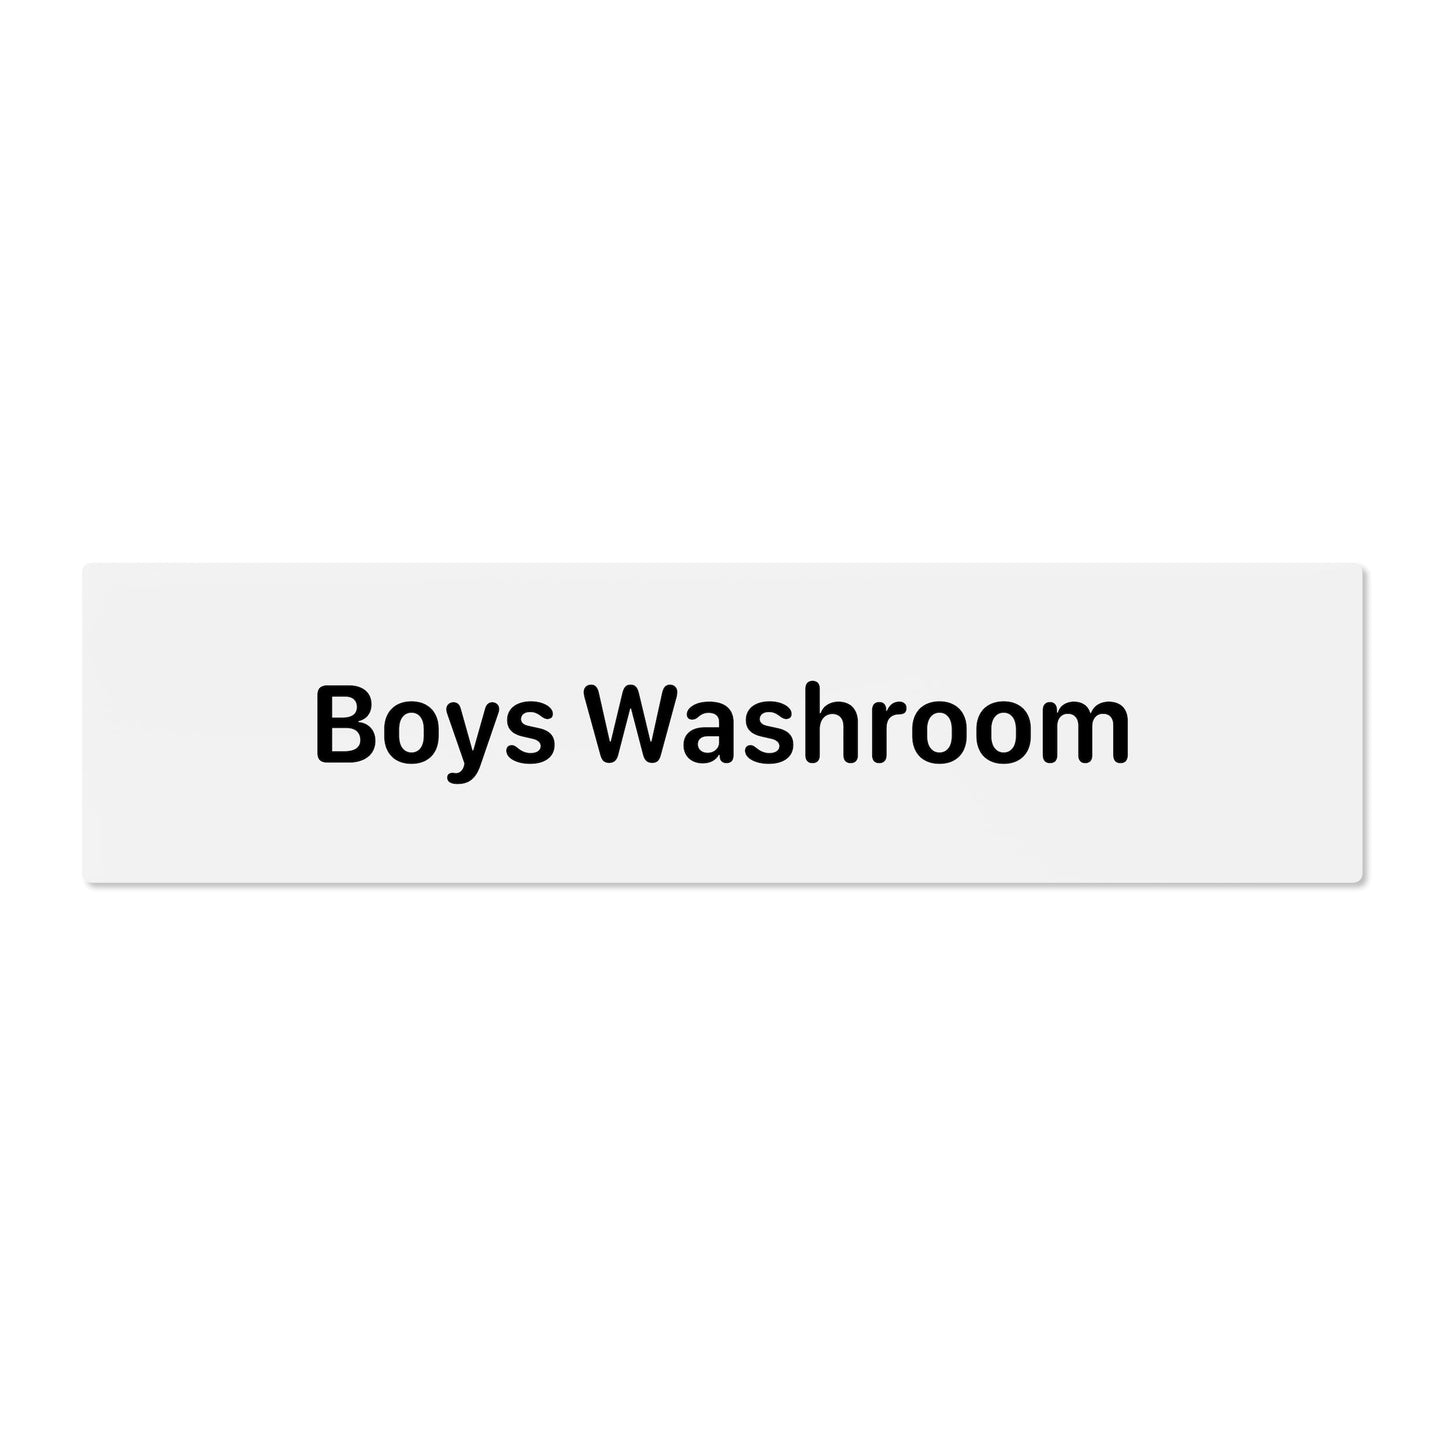 Boys Washroom